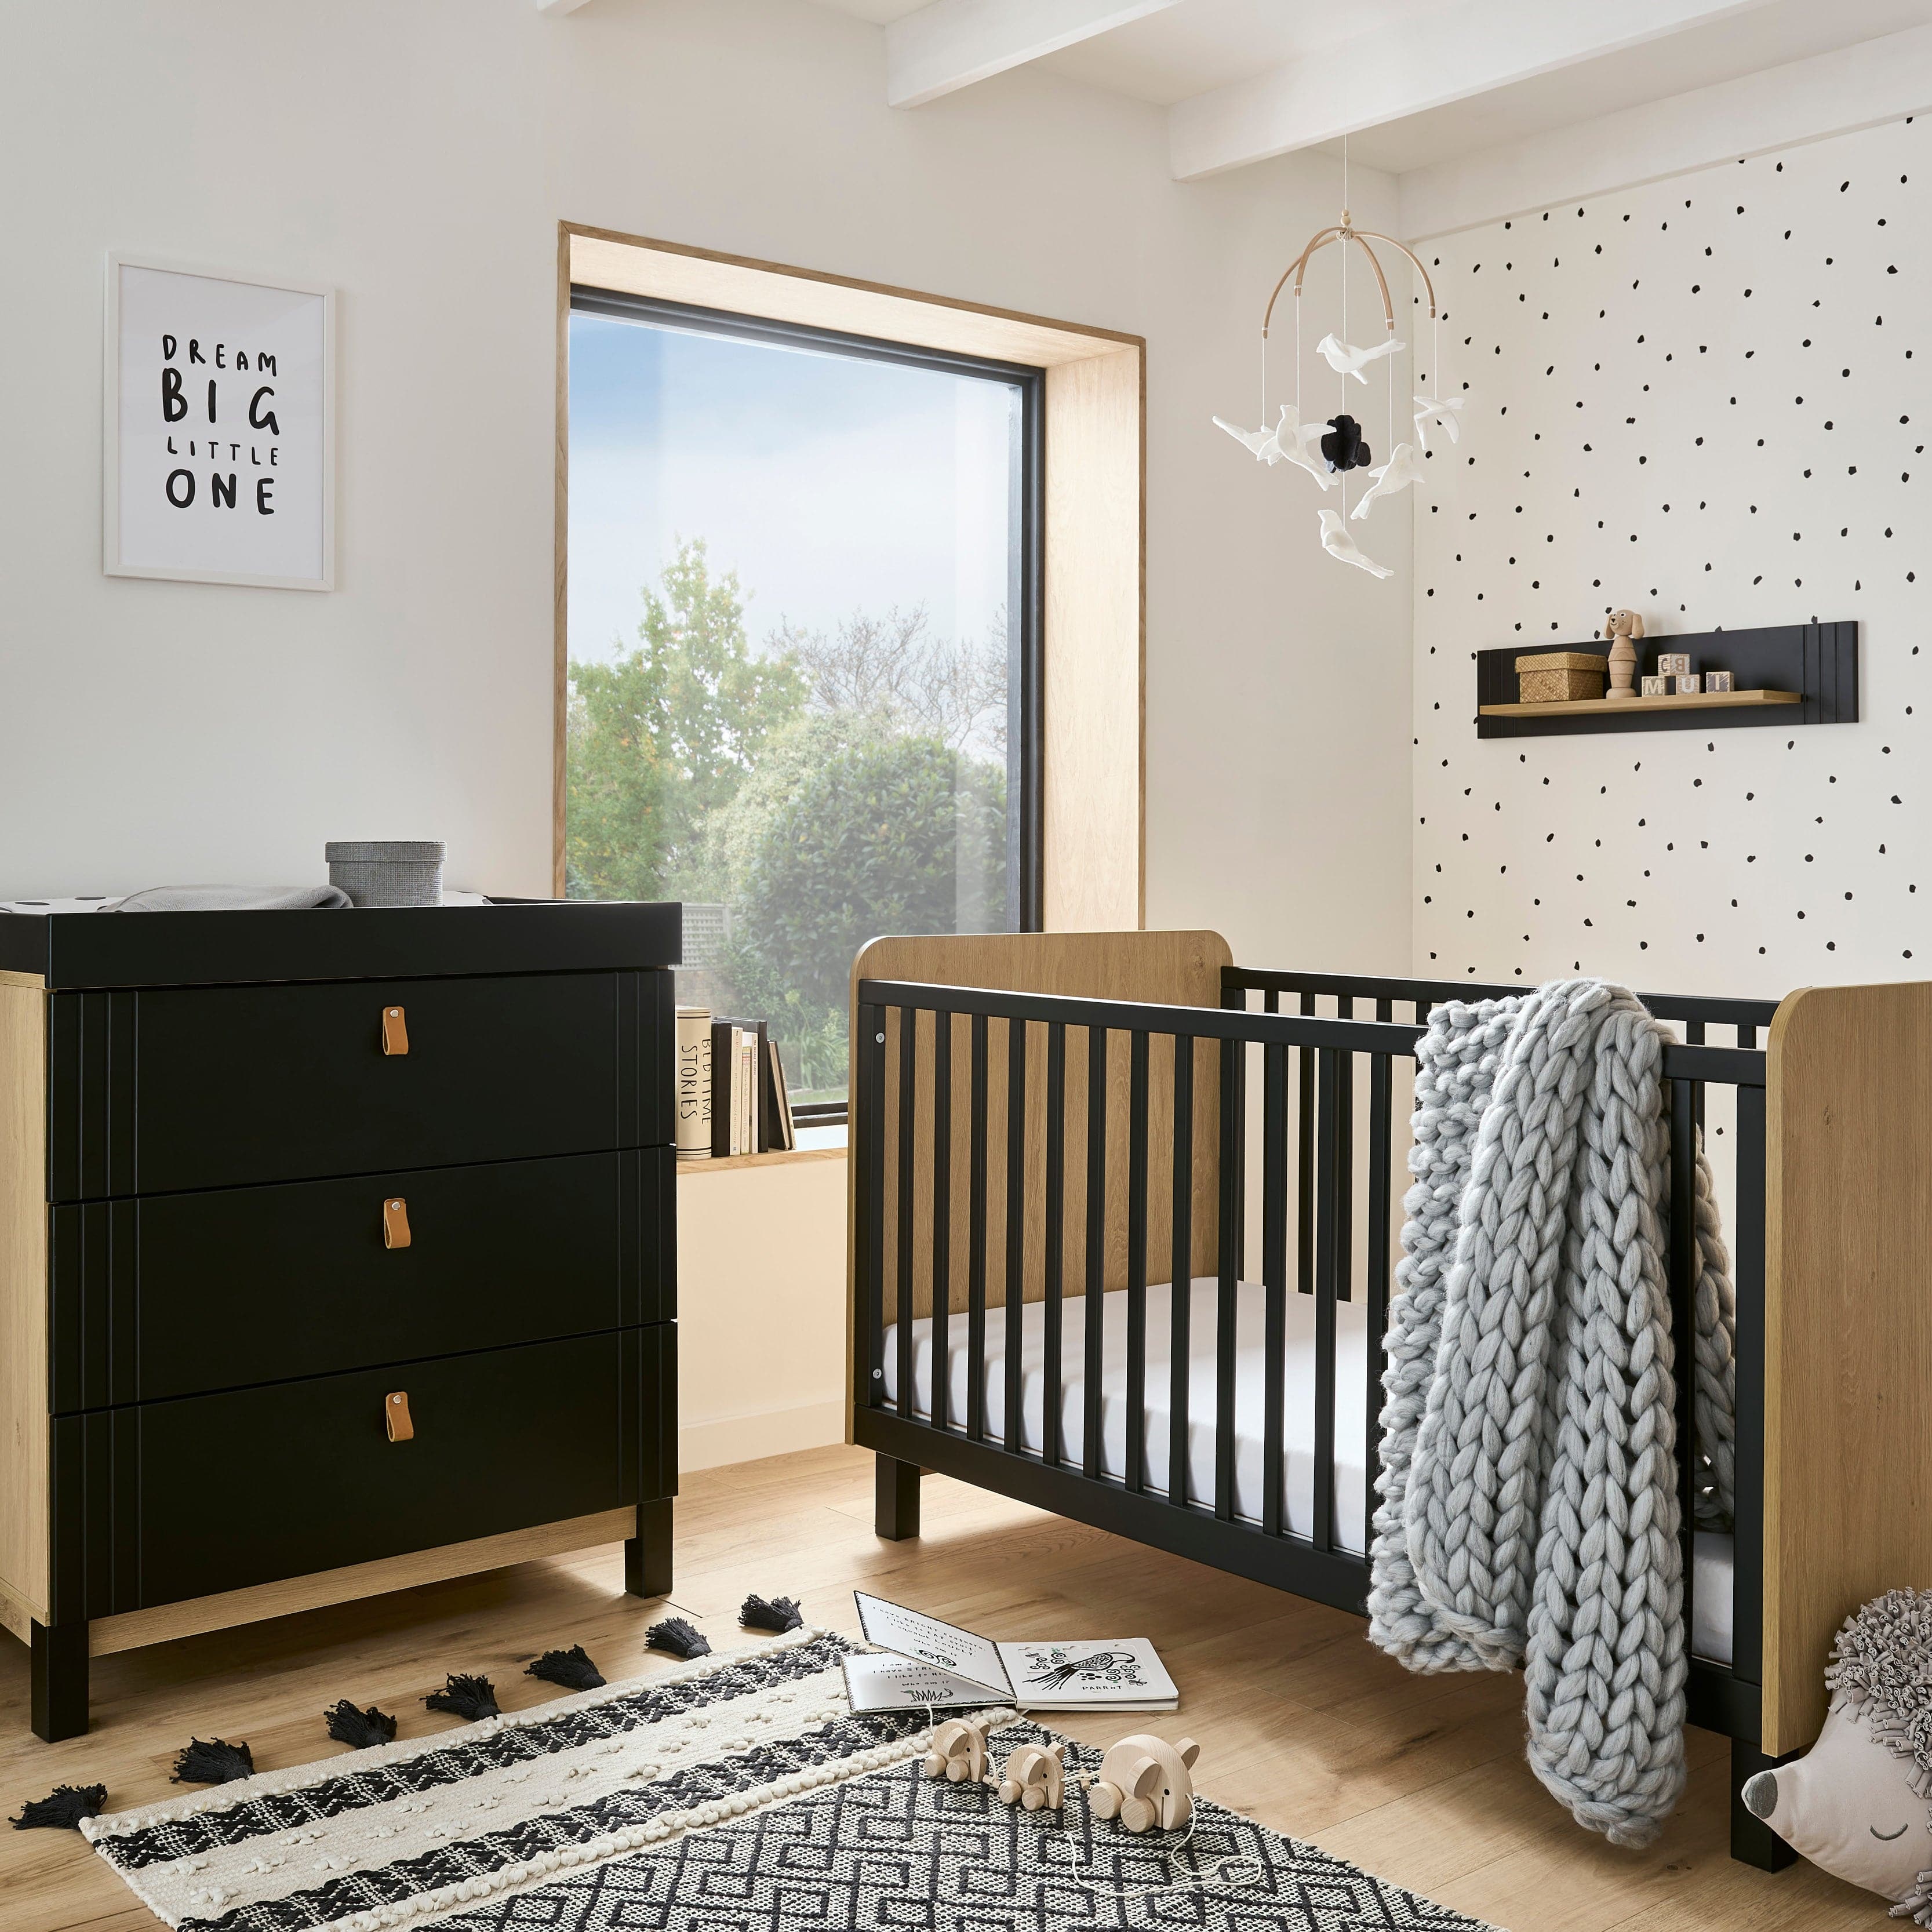 Cuddleco Rafi 2 Piece Nursery Furniture Set - Oak & Black - For Your Little One